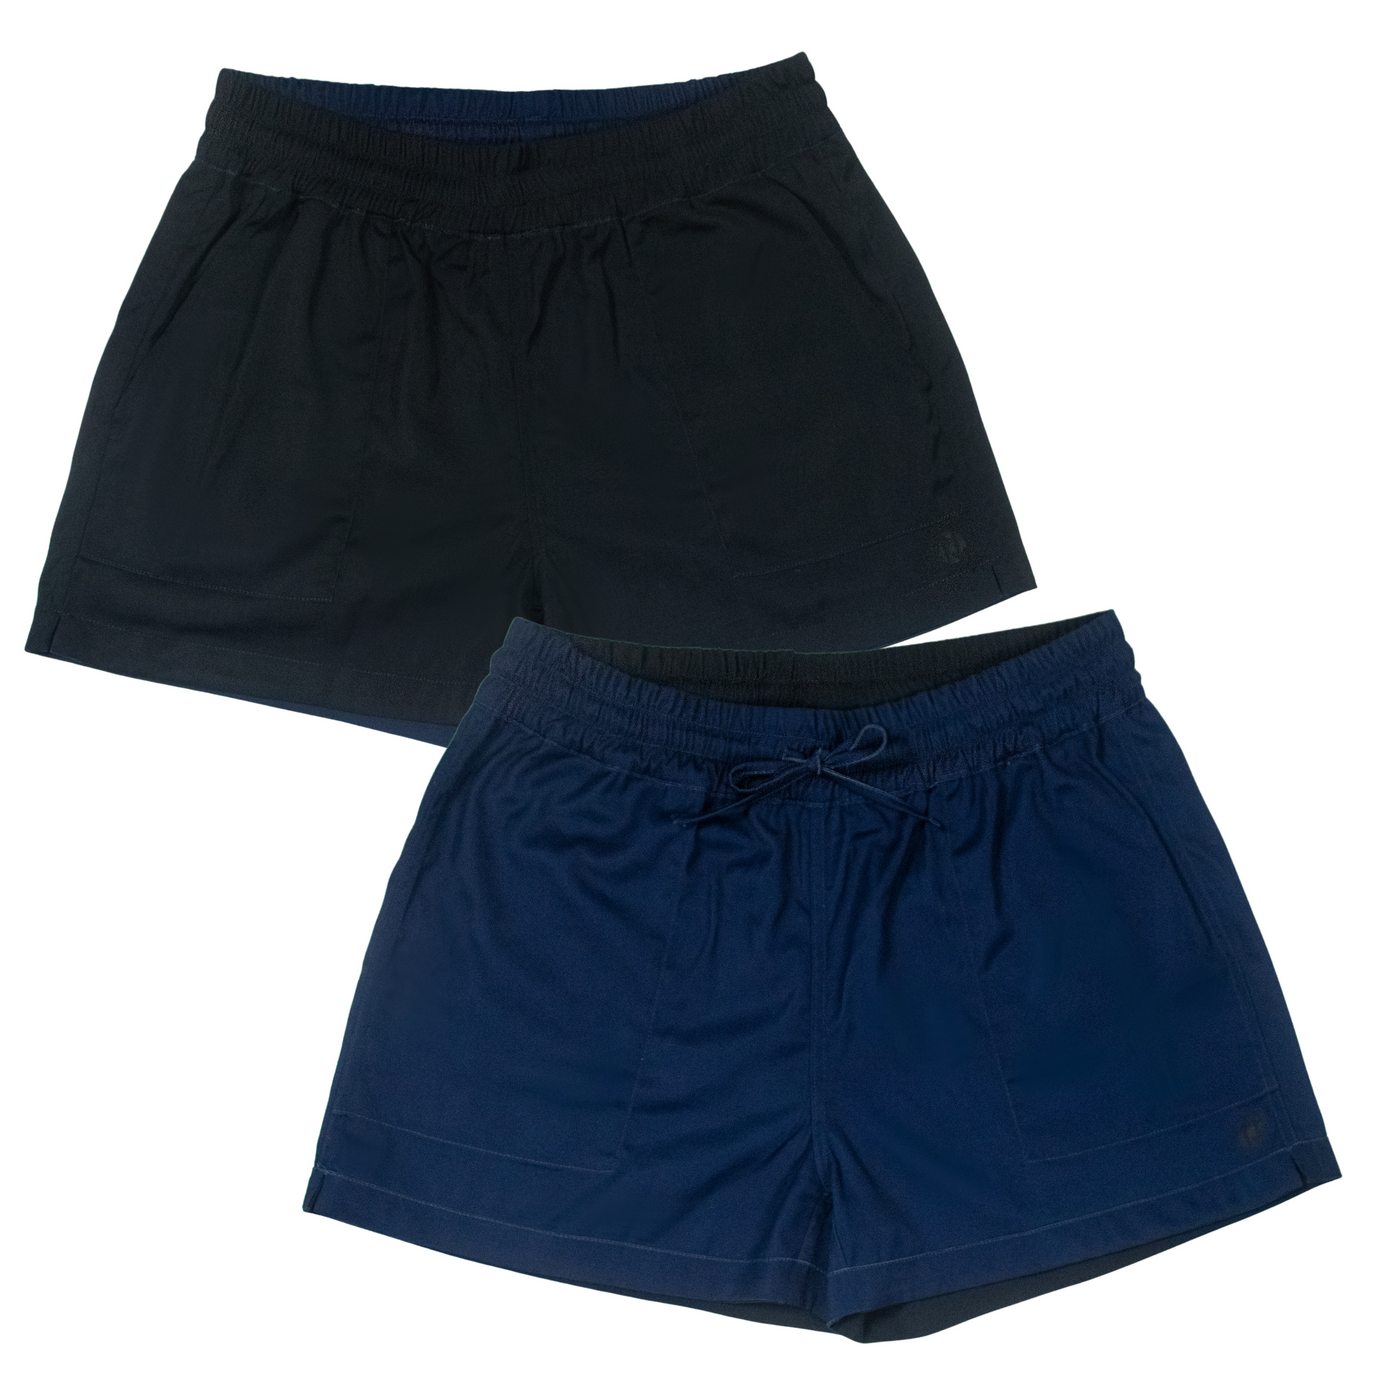 Splice Clothing Mundo Reversible Shorts Black and Caribbean Navy